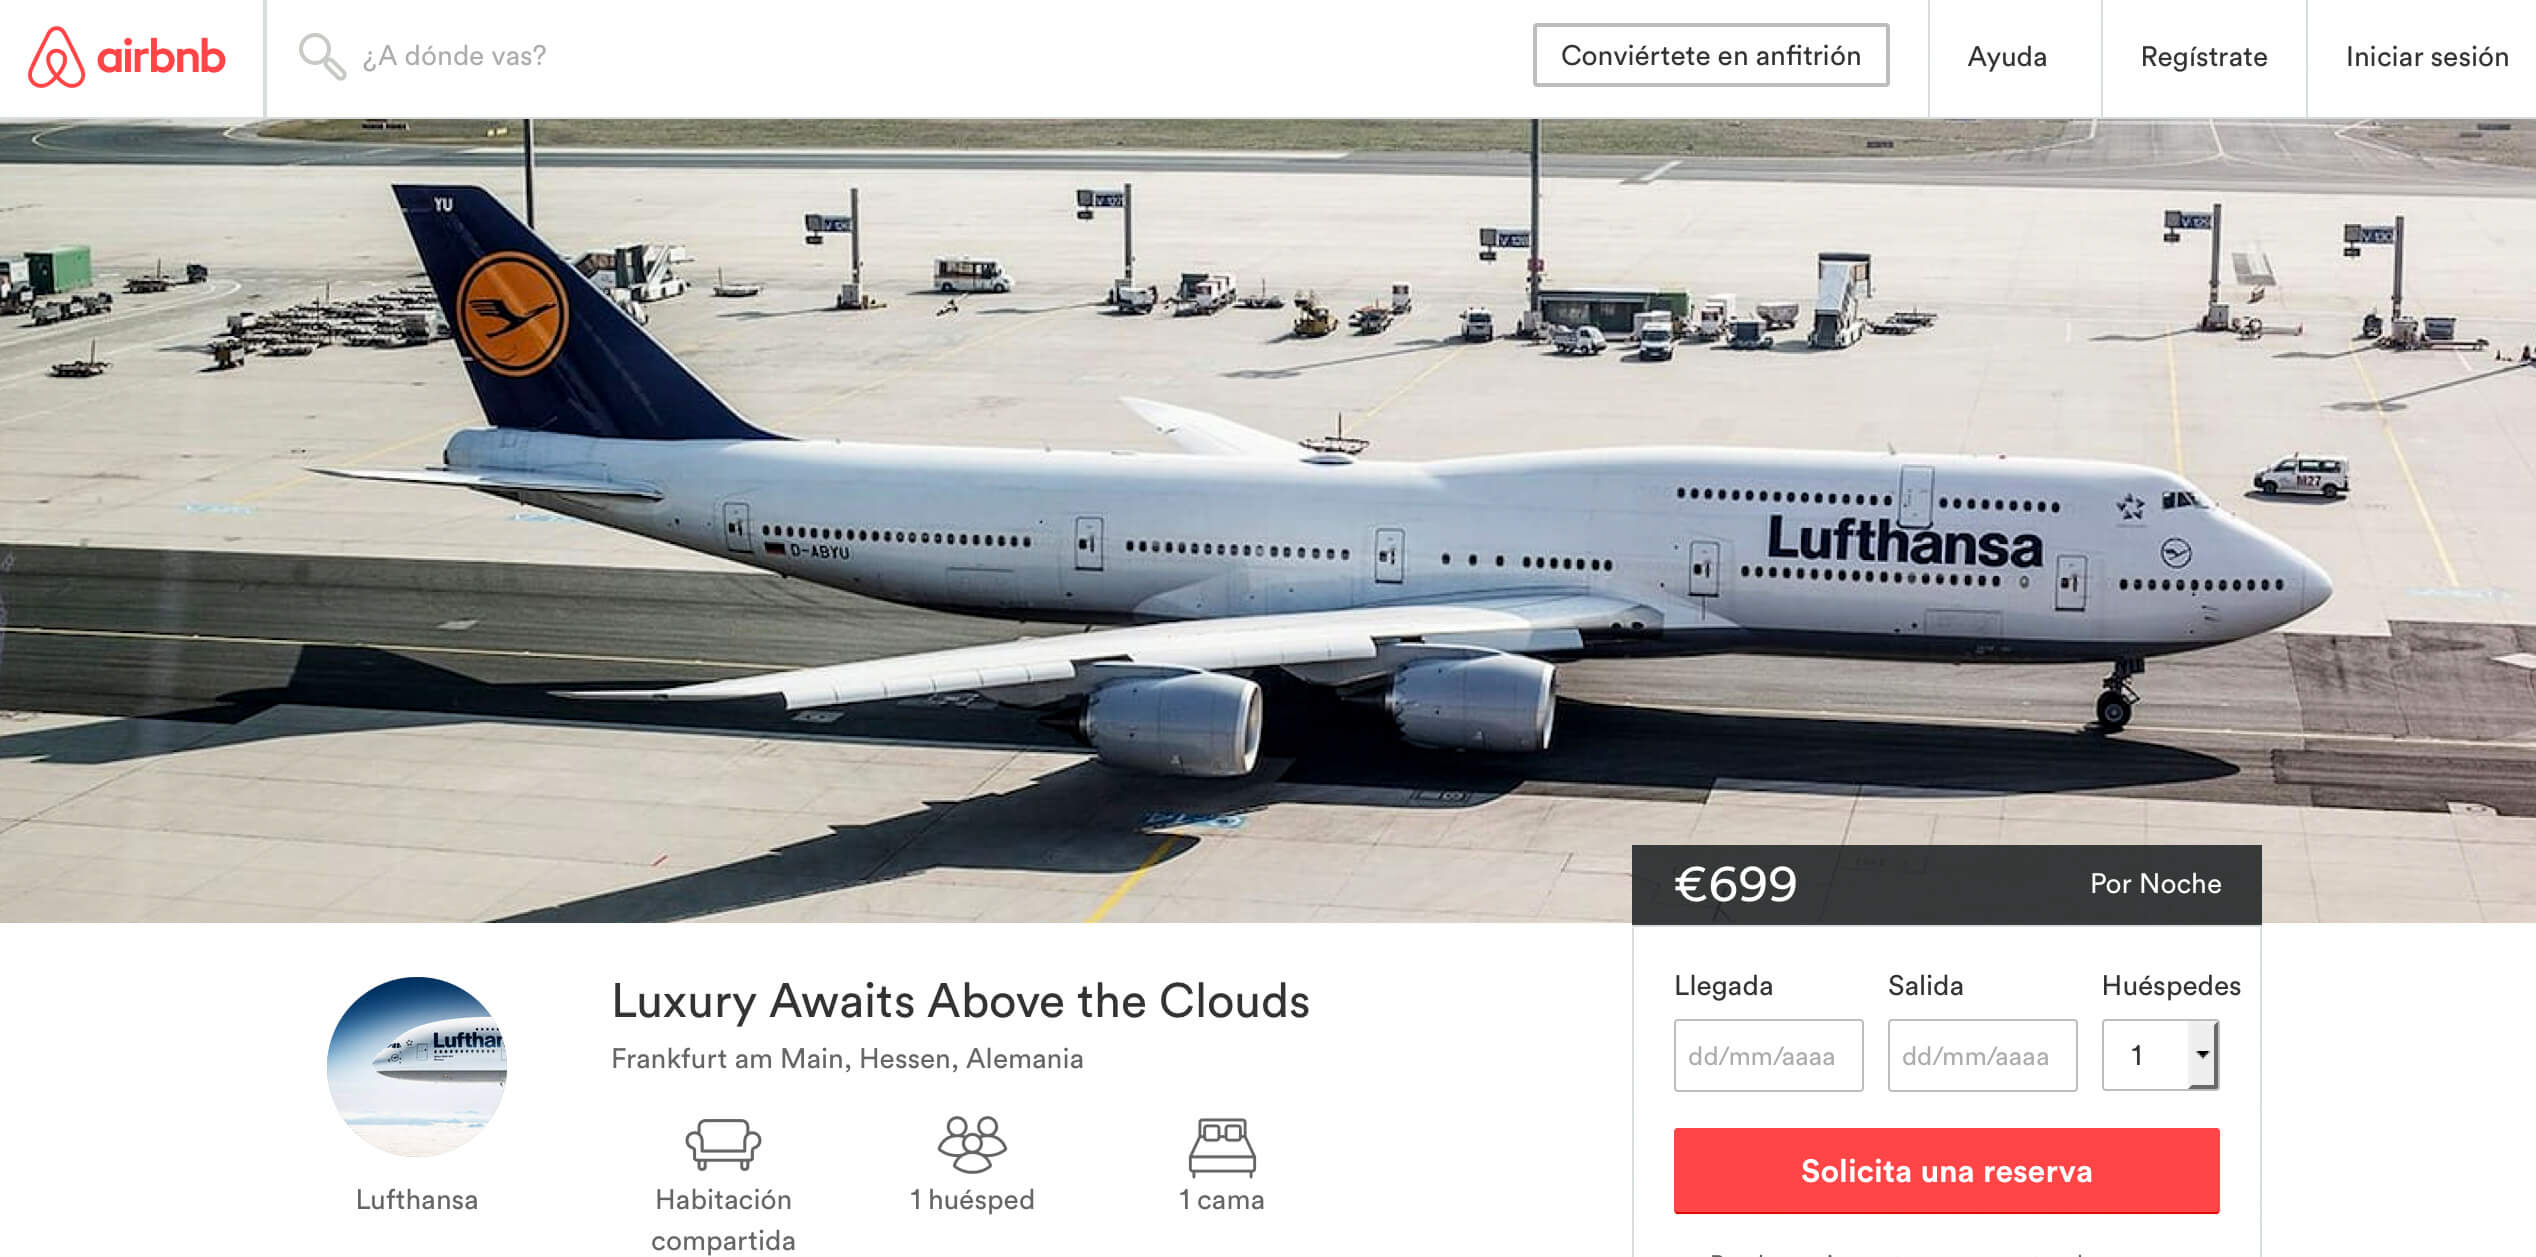 Lufthansa-Airbnb